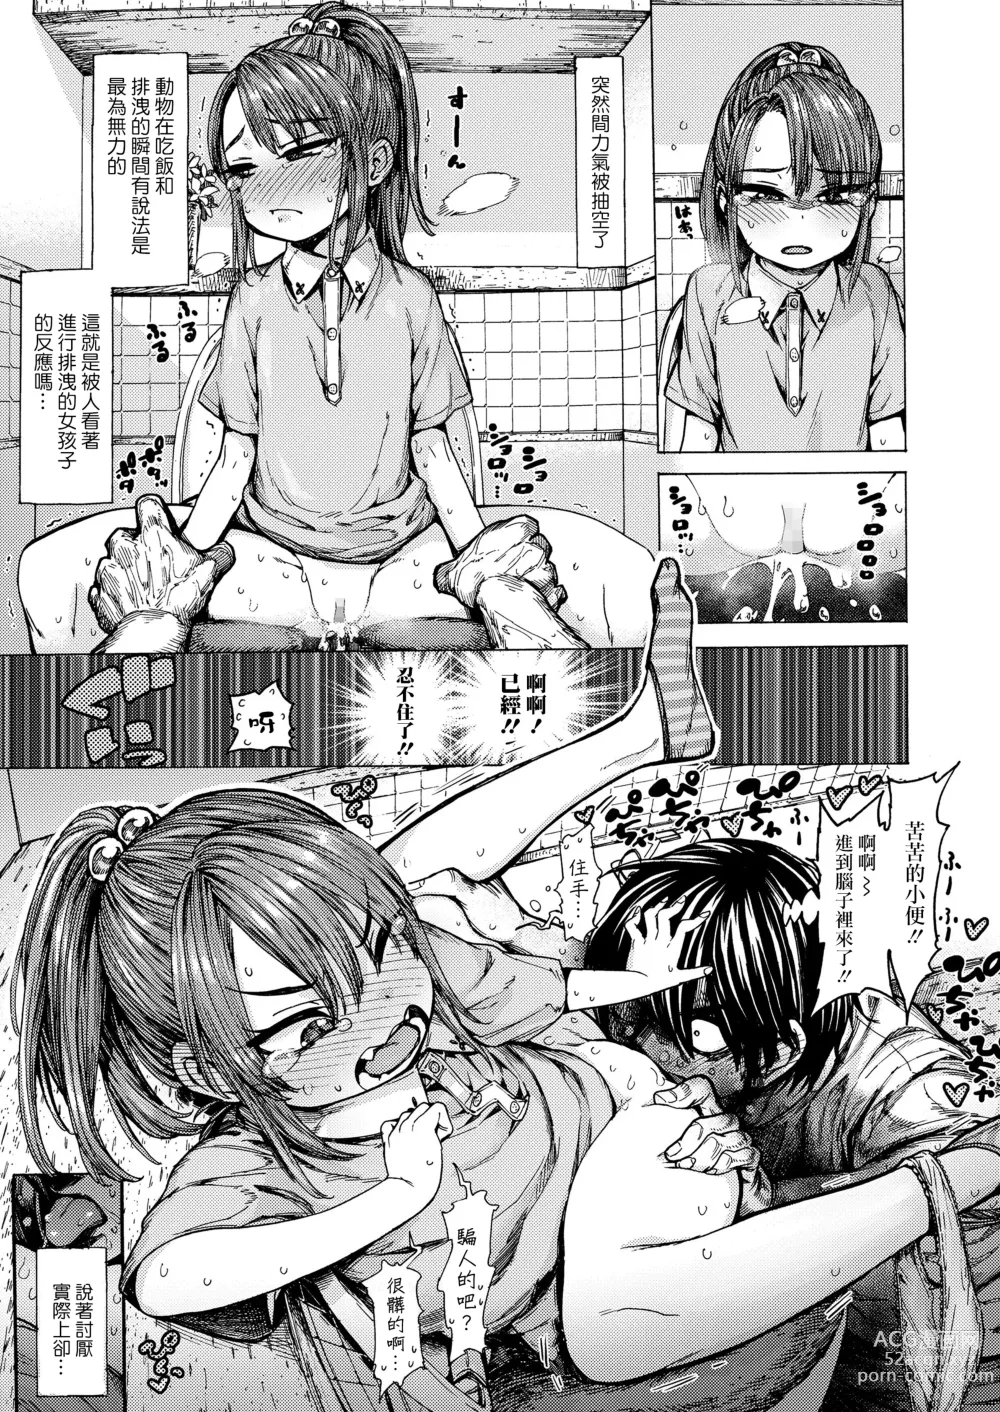 Page 9 of manga Kyou no Pantsu!